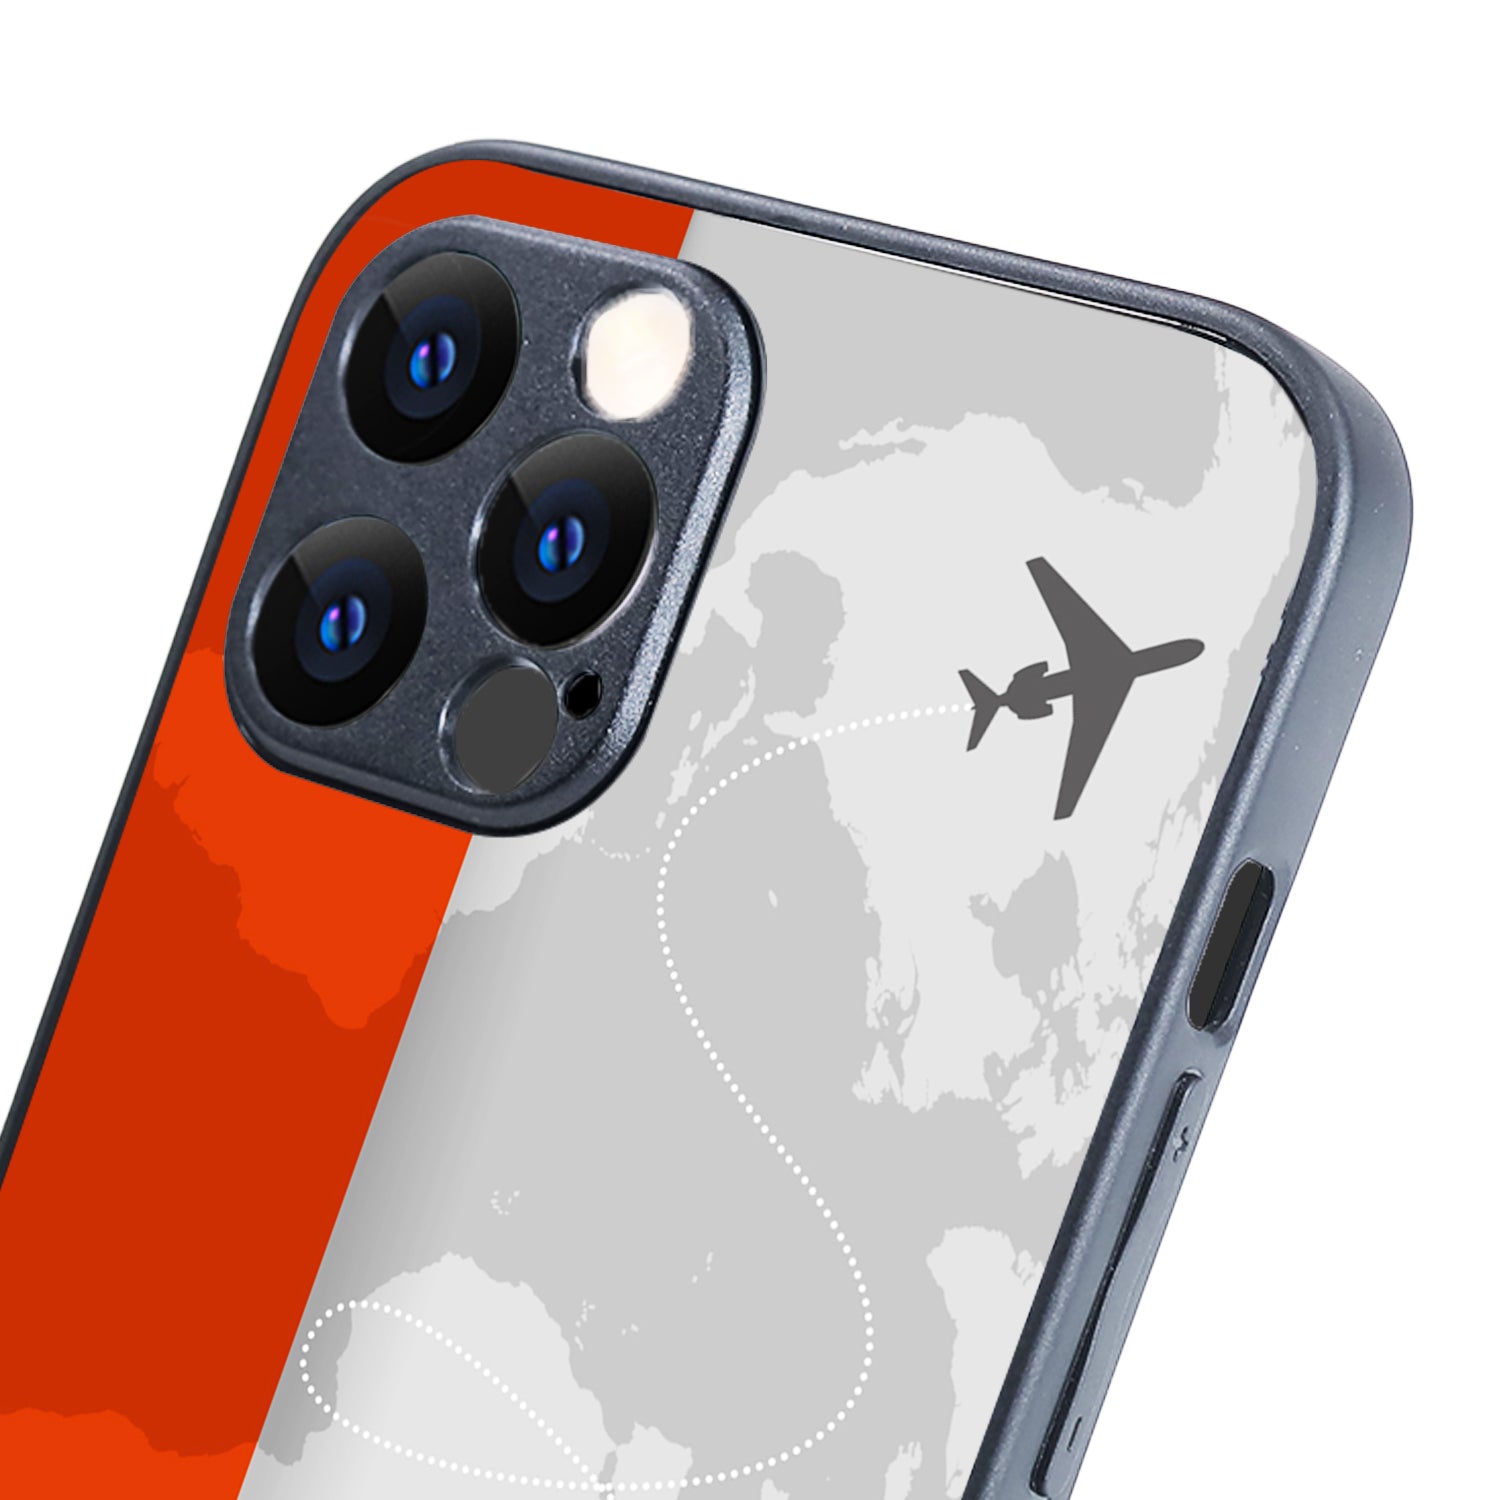 World Tour Travel iPhone 12 Pro Max Case